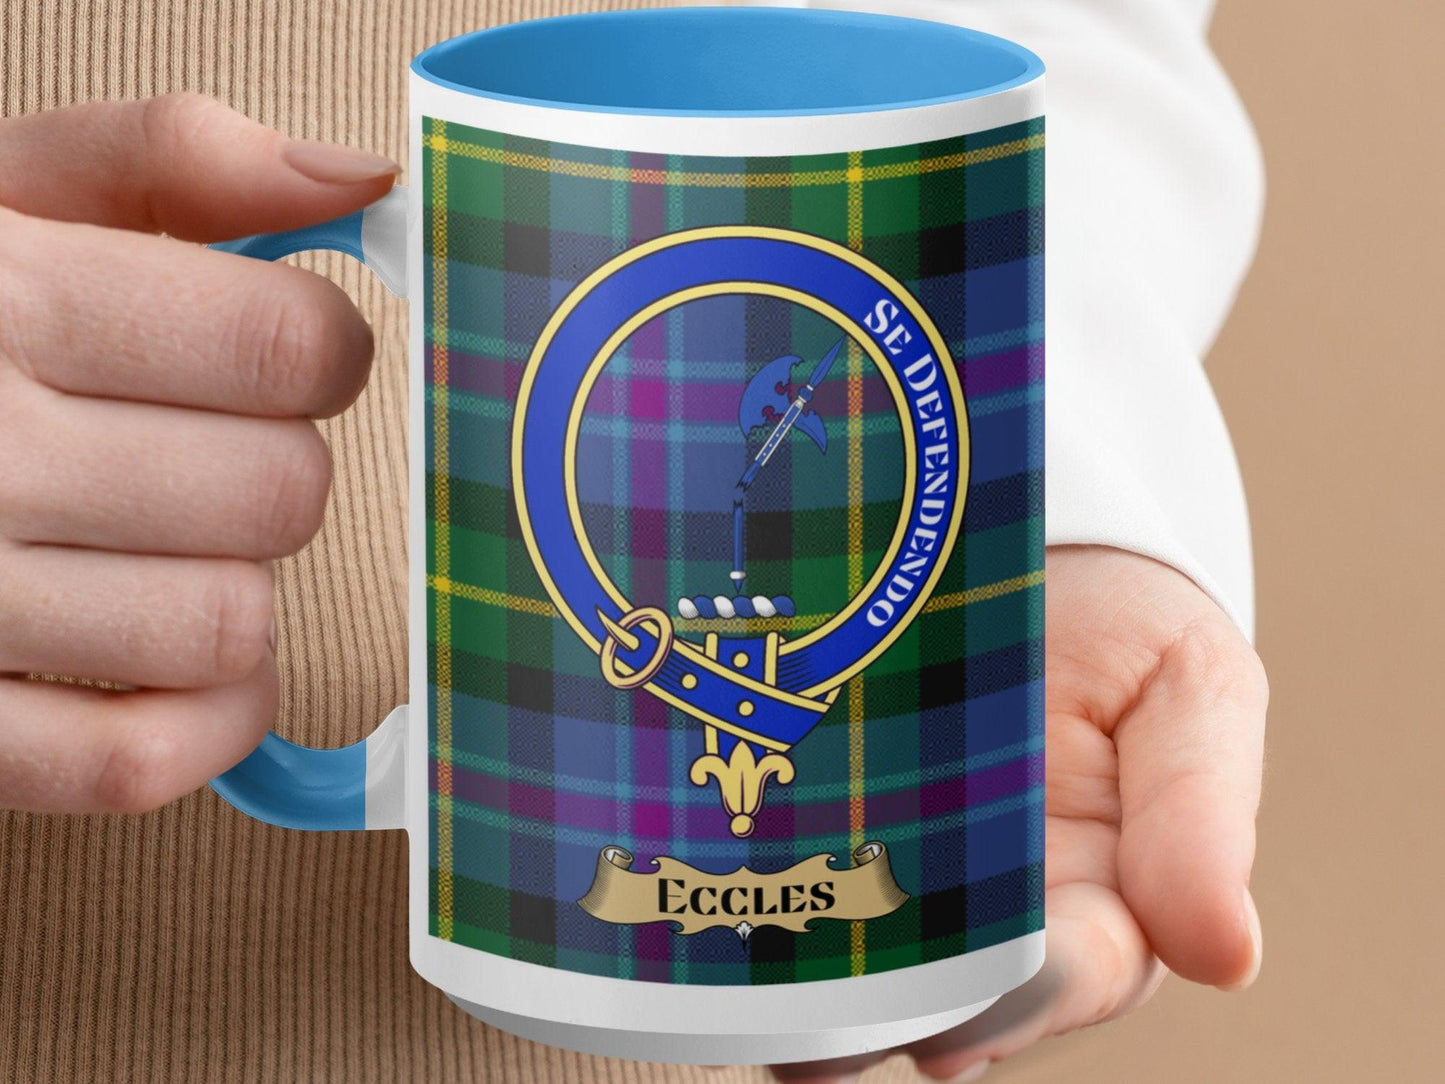 Scottish Clan Eccles Crest Tartan Plaid Emblem Mug - Living Stone Gifts